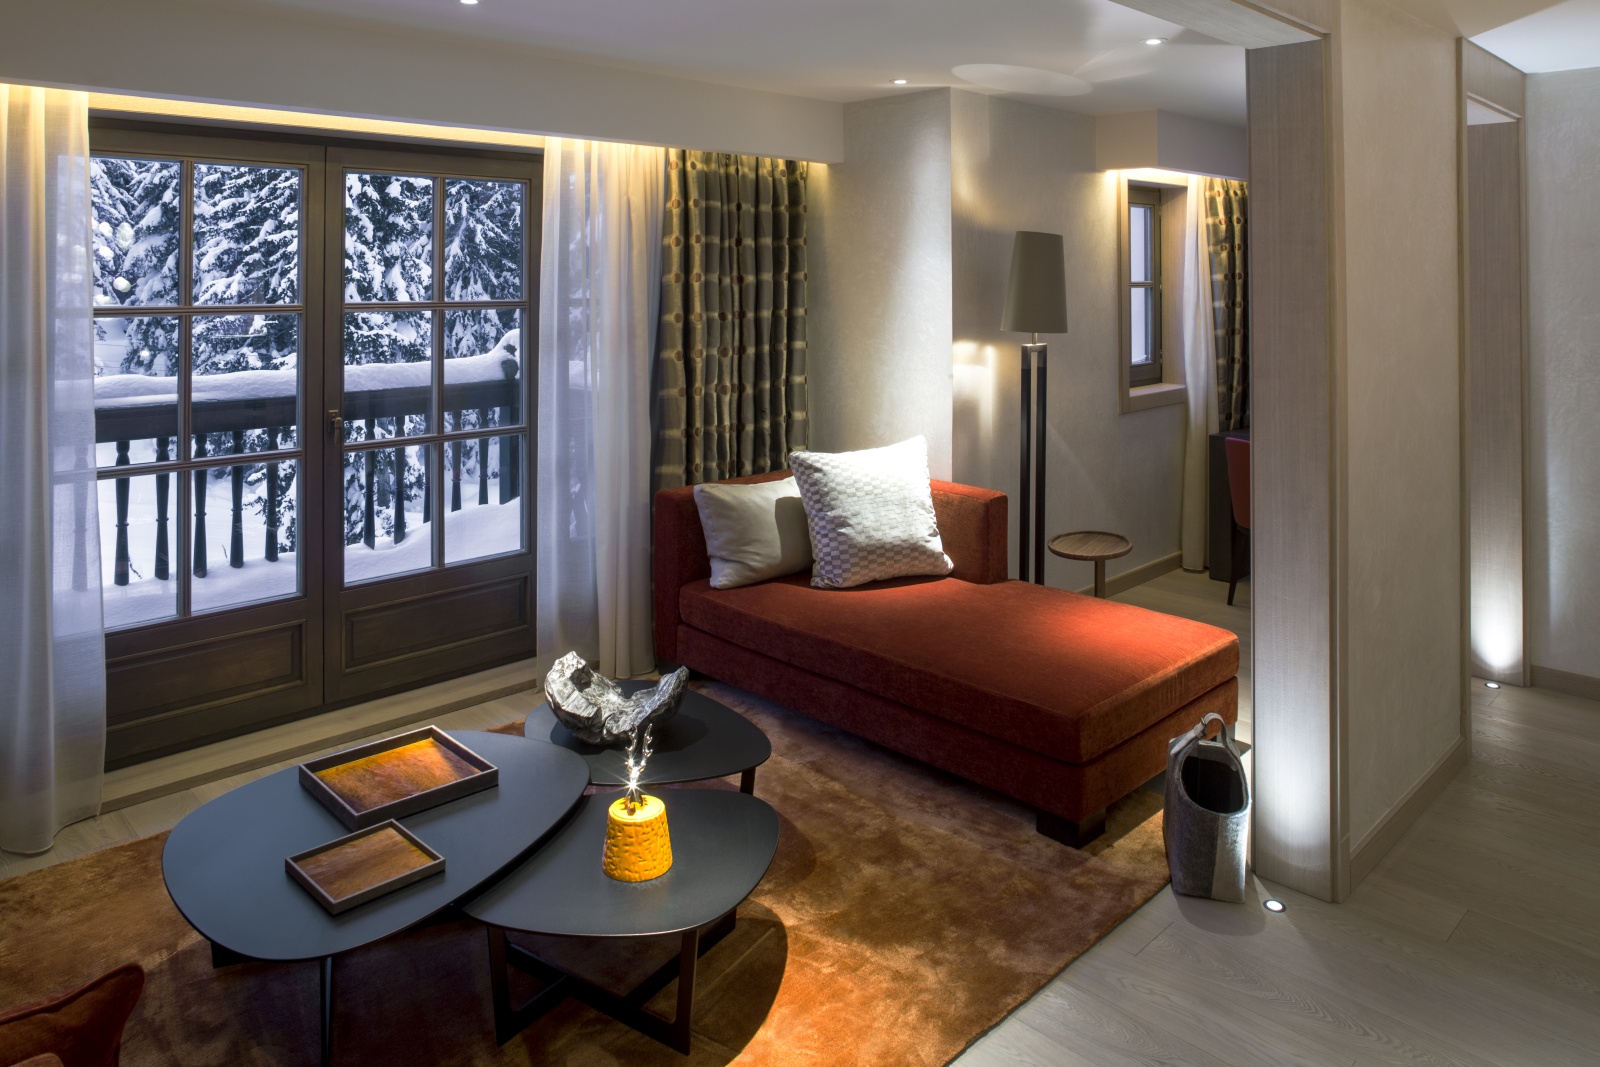 Hotels-Cheval Blanc-Courchevel-JetSetReport